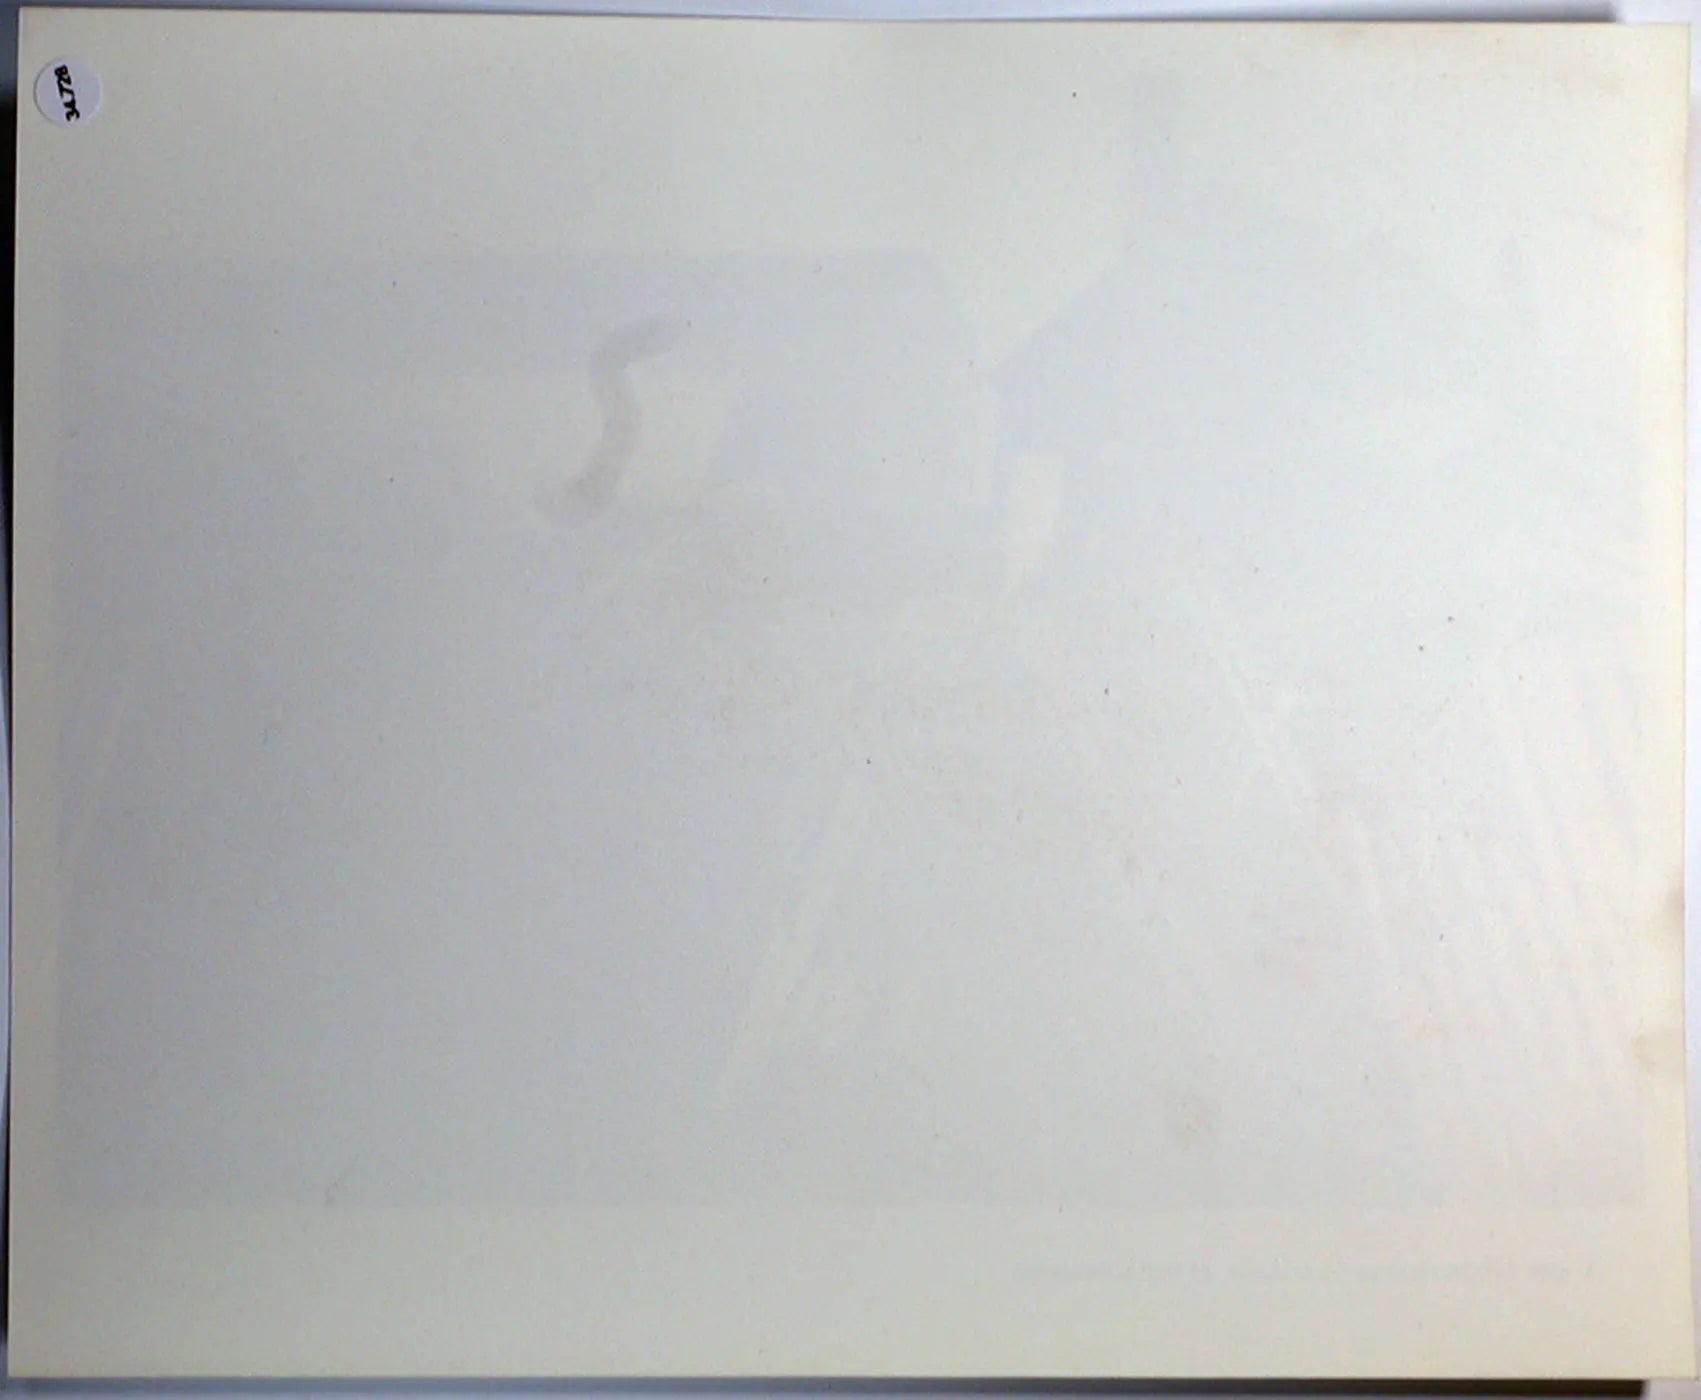 Film Tha Bay Boy Ft 34728 - Stampa 20x25 cm - Farabola Stampa ai sali d'argento